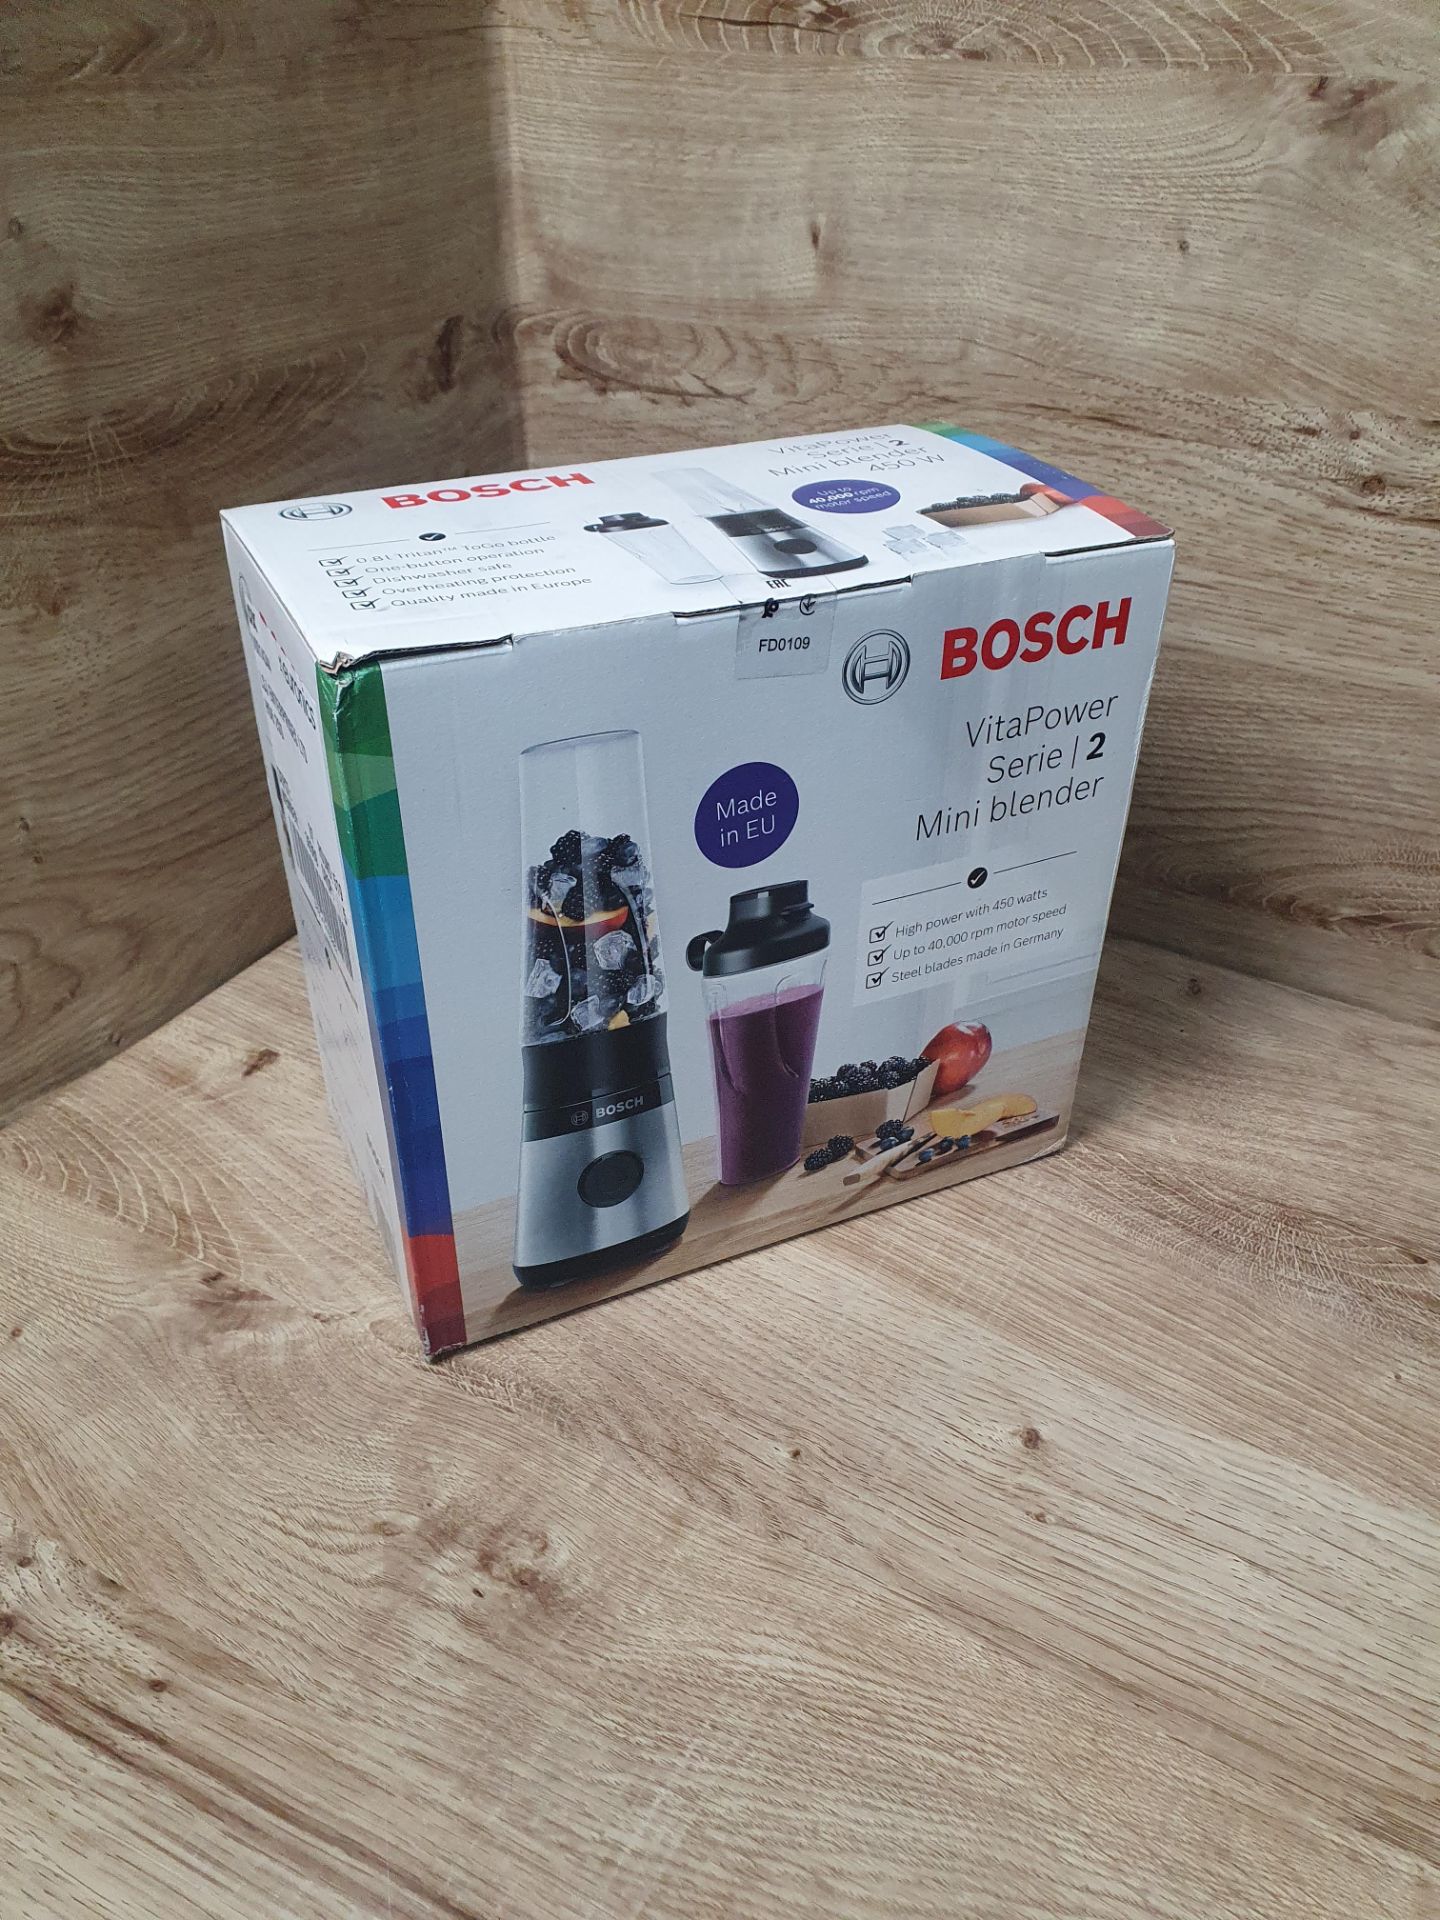 * Bosch Vita Power Mini Blender RRP £60